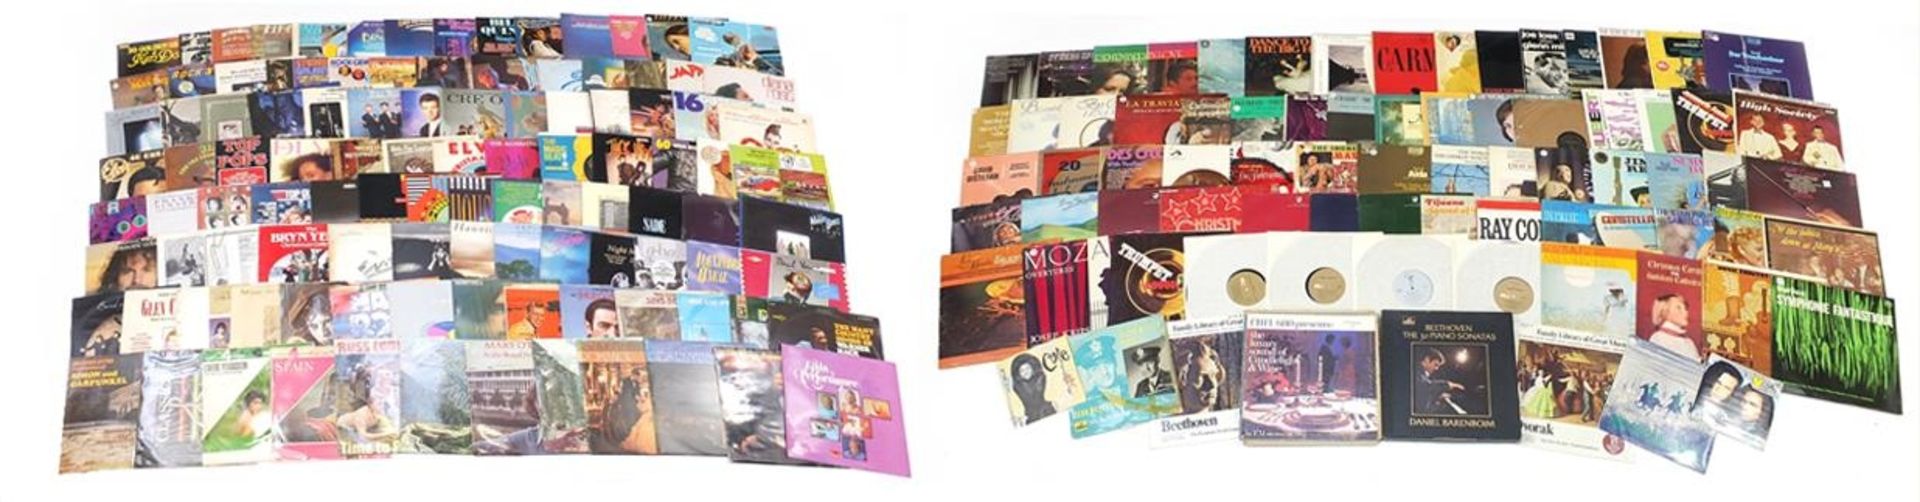 Vinyl LPs including Ken Dodd, James Last, David Bowie, Diana Ross, George Harrison and Rick Astley